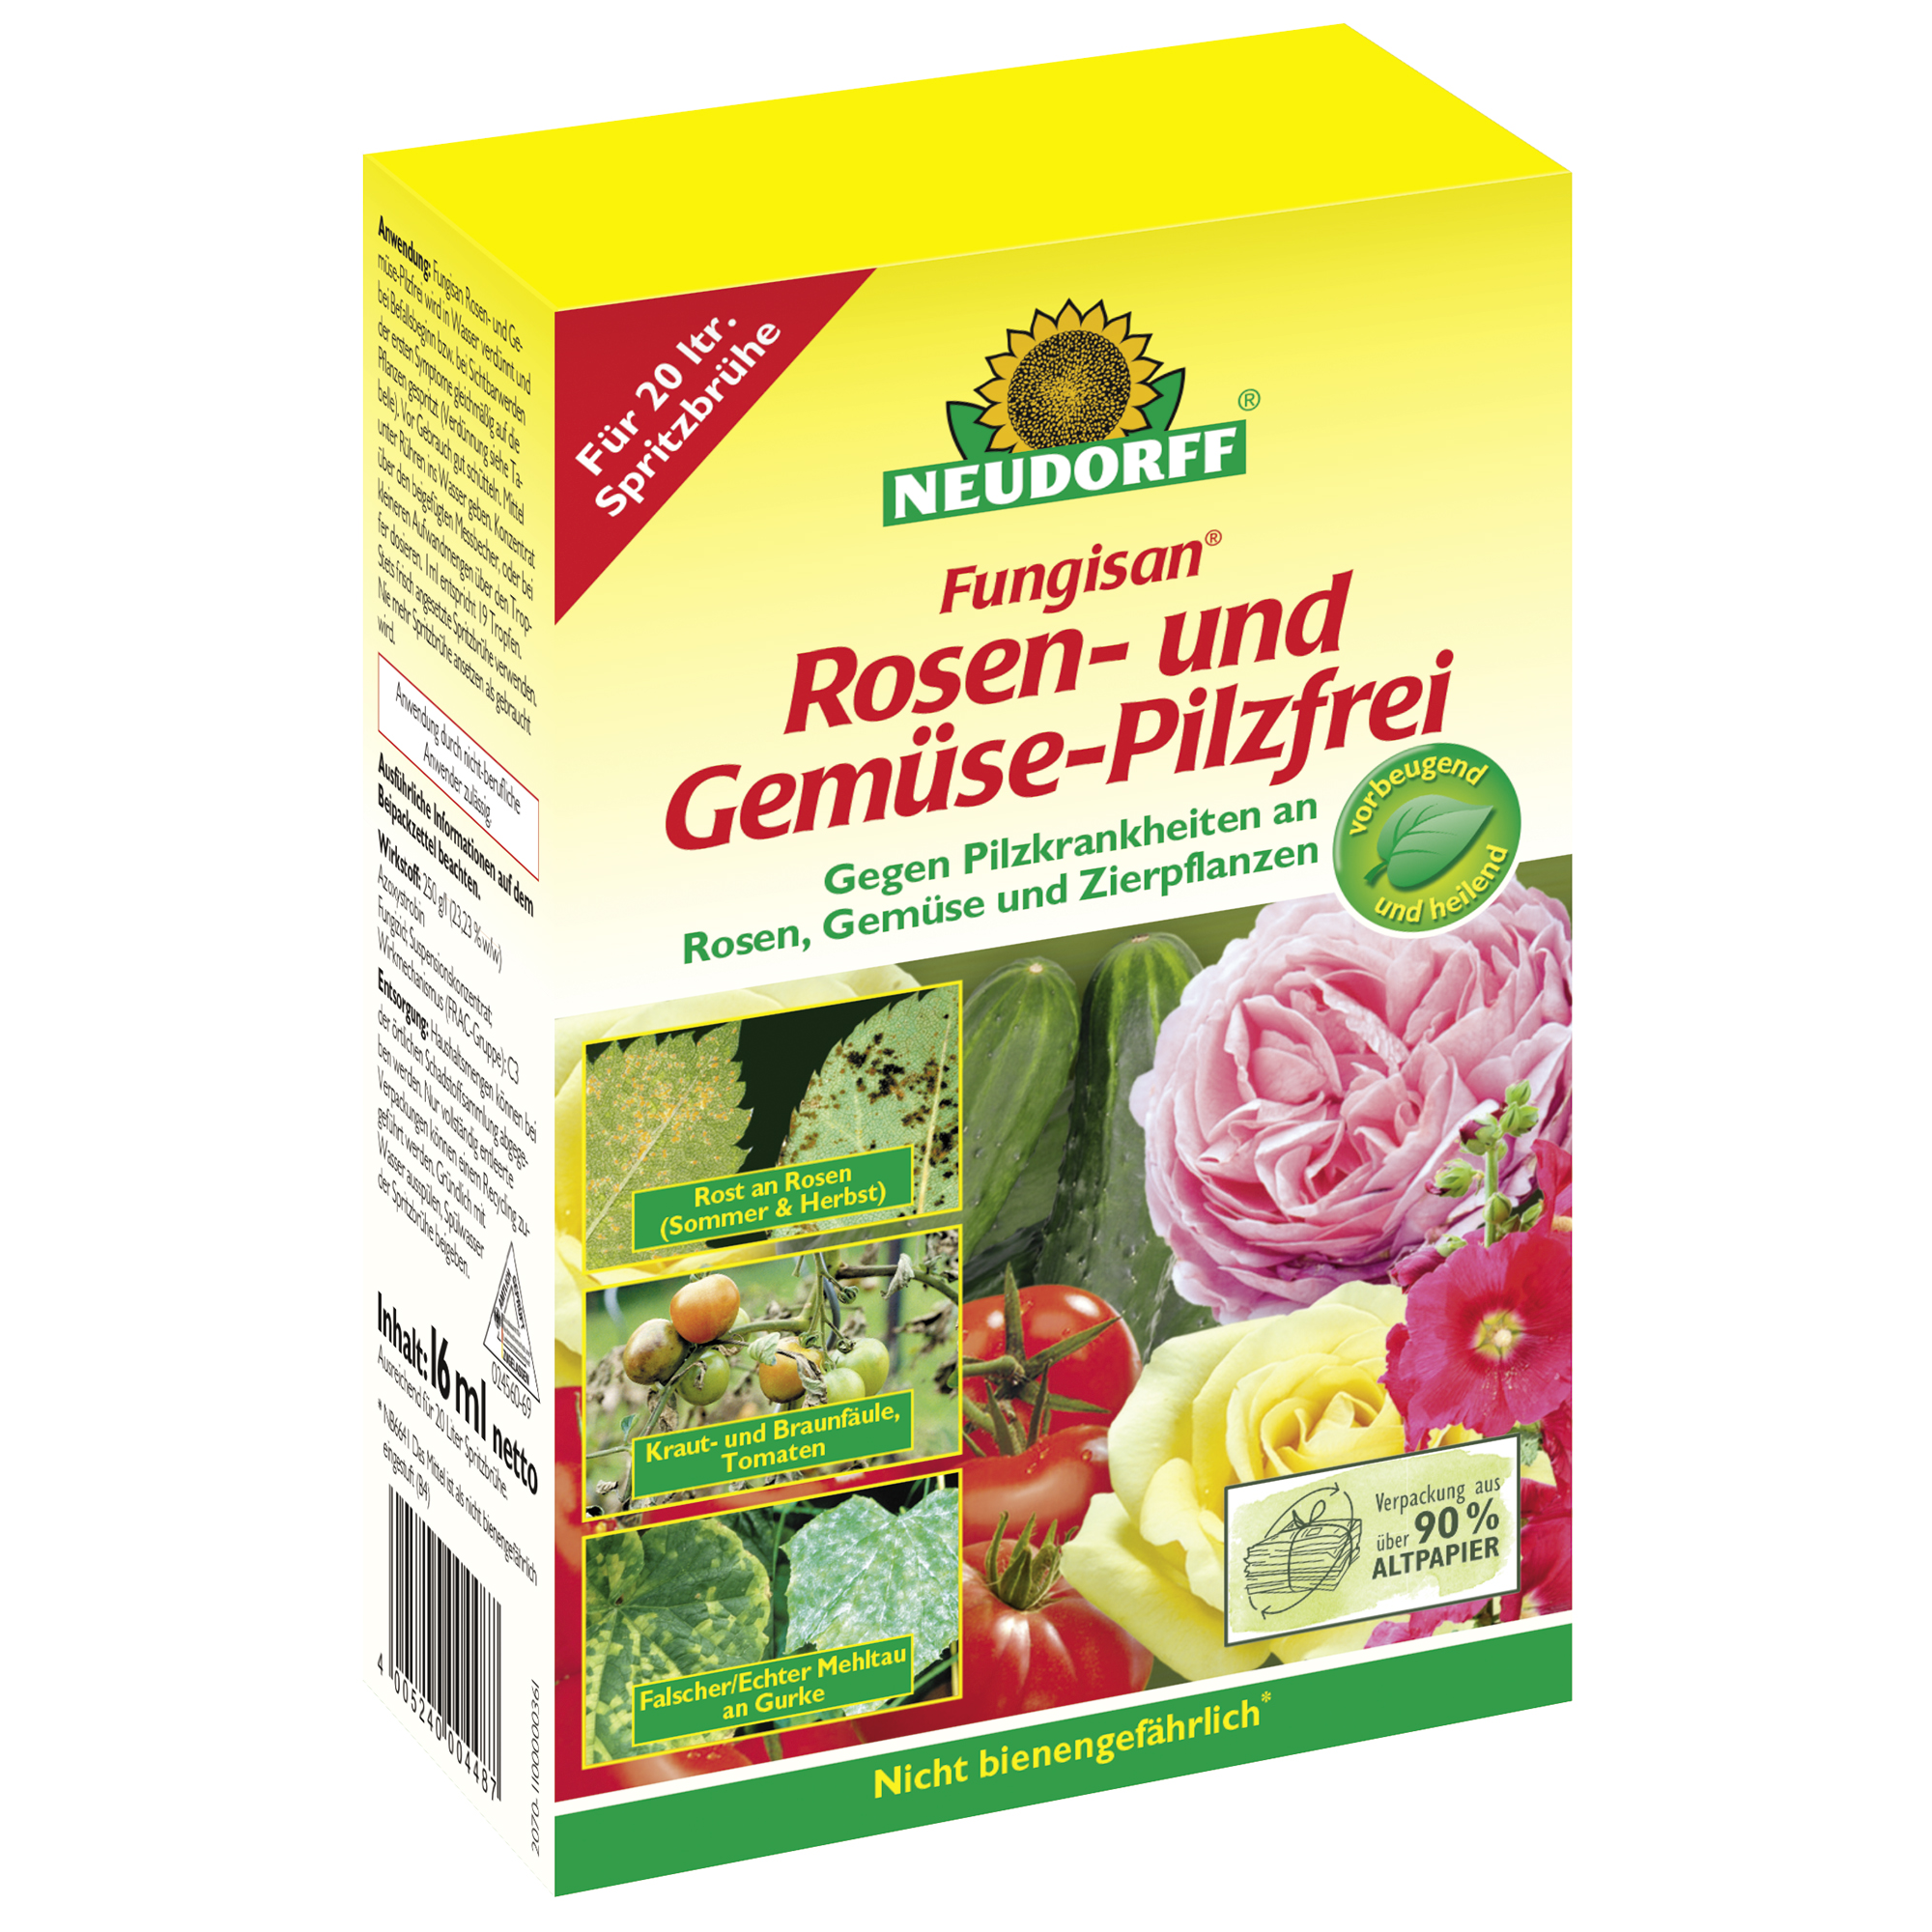 Fungisan Rosen- und Gemüse-Pilzfrei 16 ml + product picture